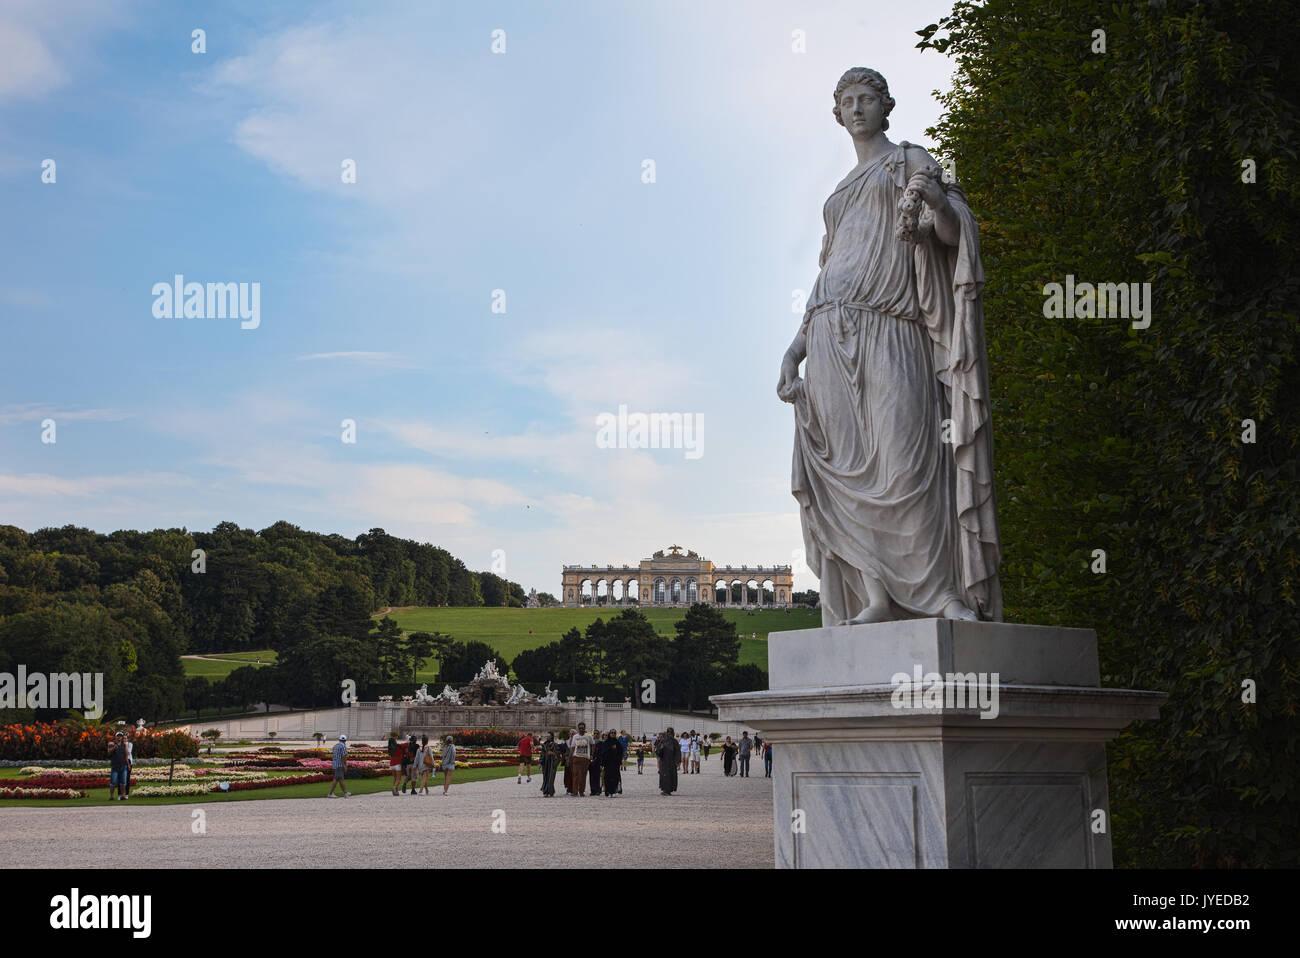 Schonbrunn Palace, UNESCO world heritage site, Vienna, Austria. Stock Photo